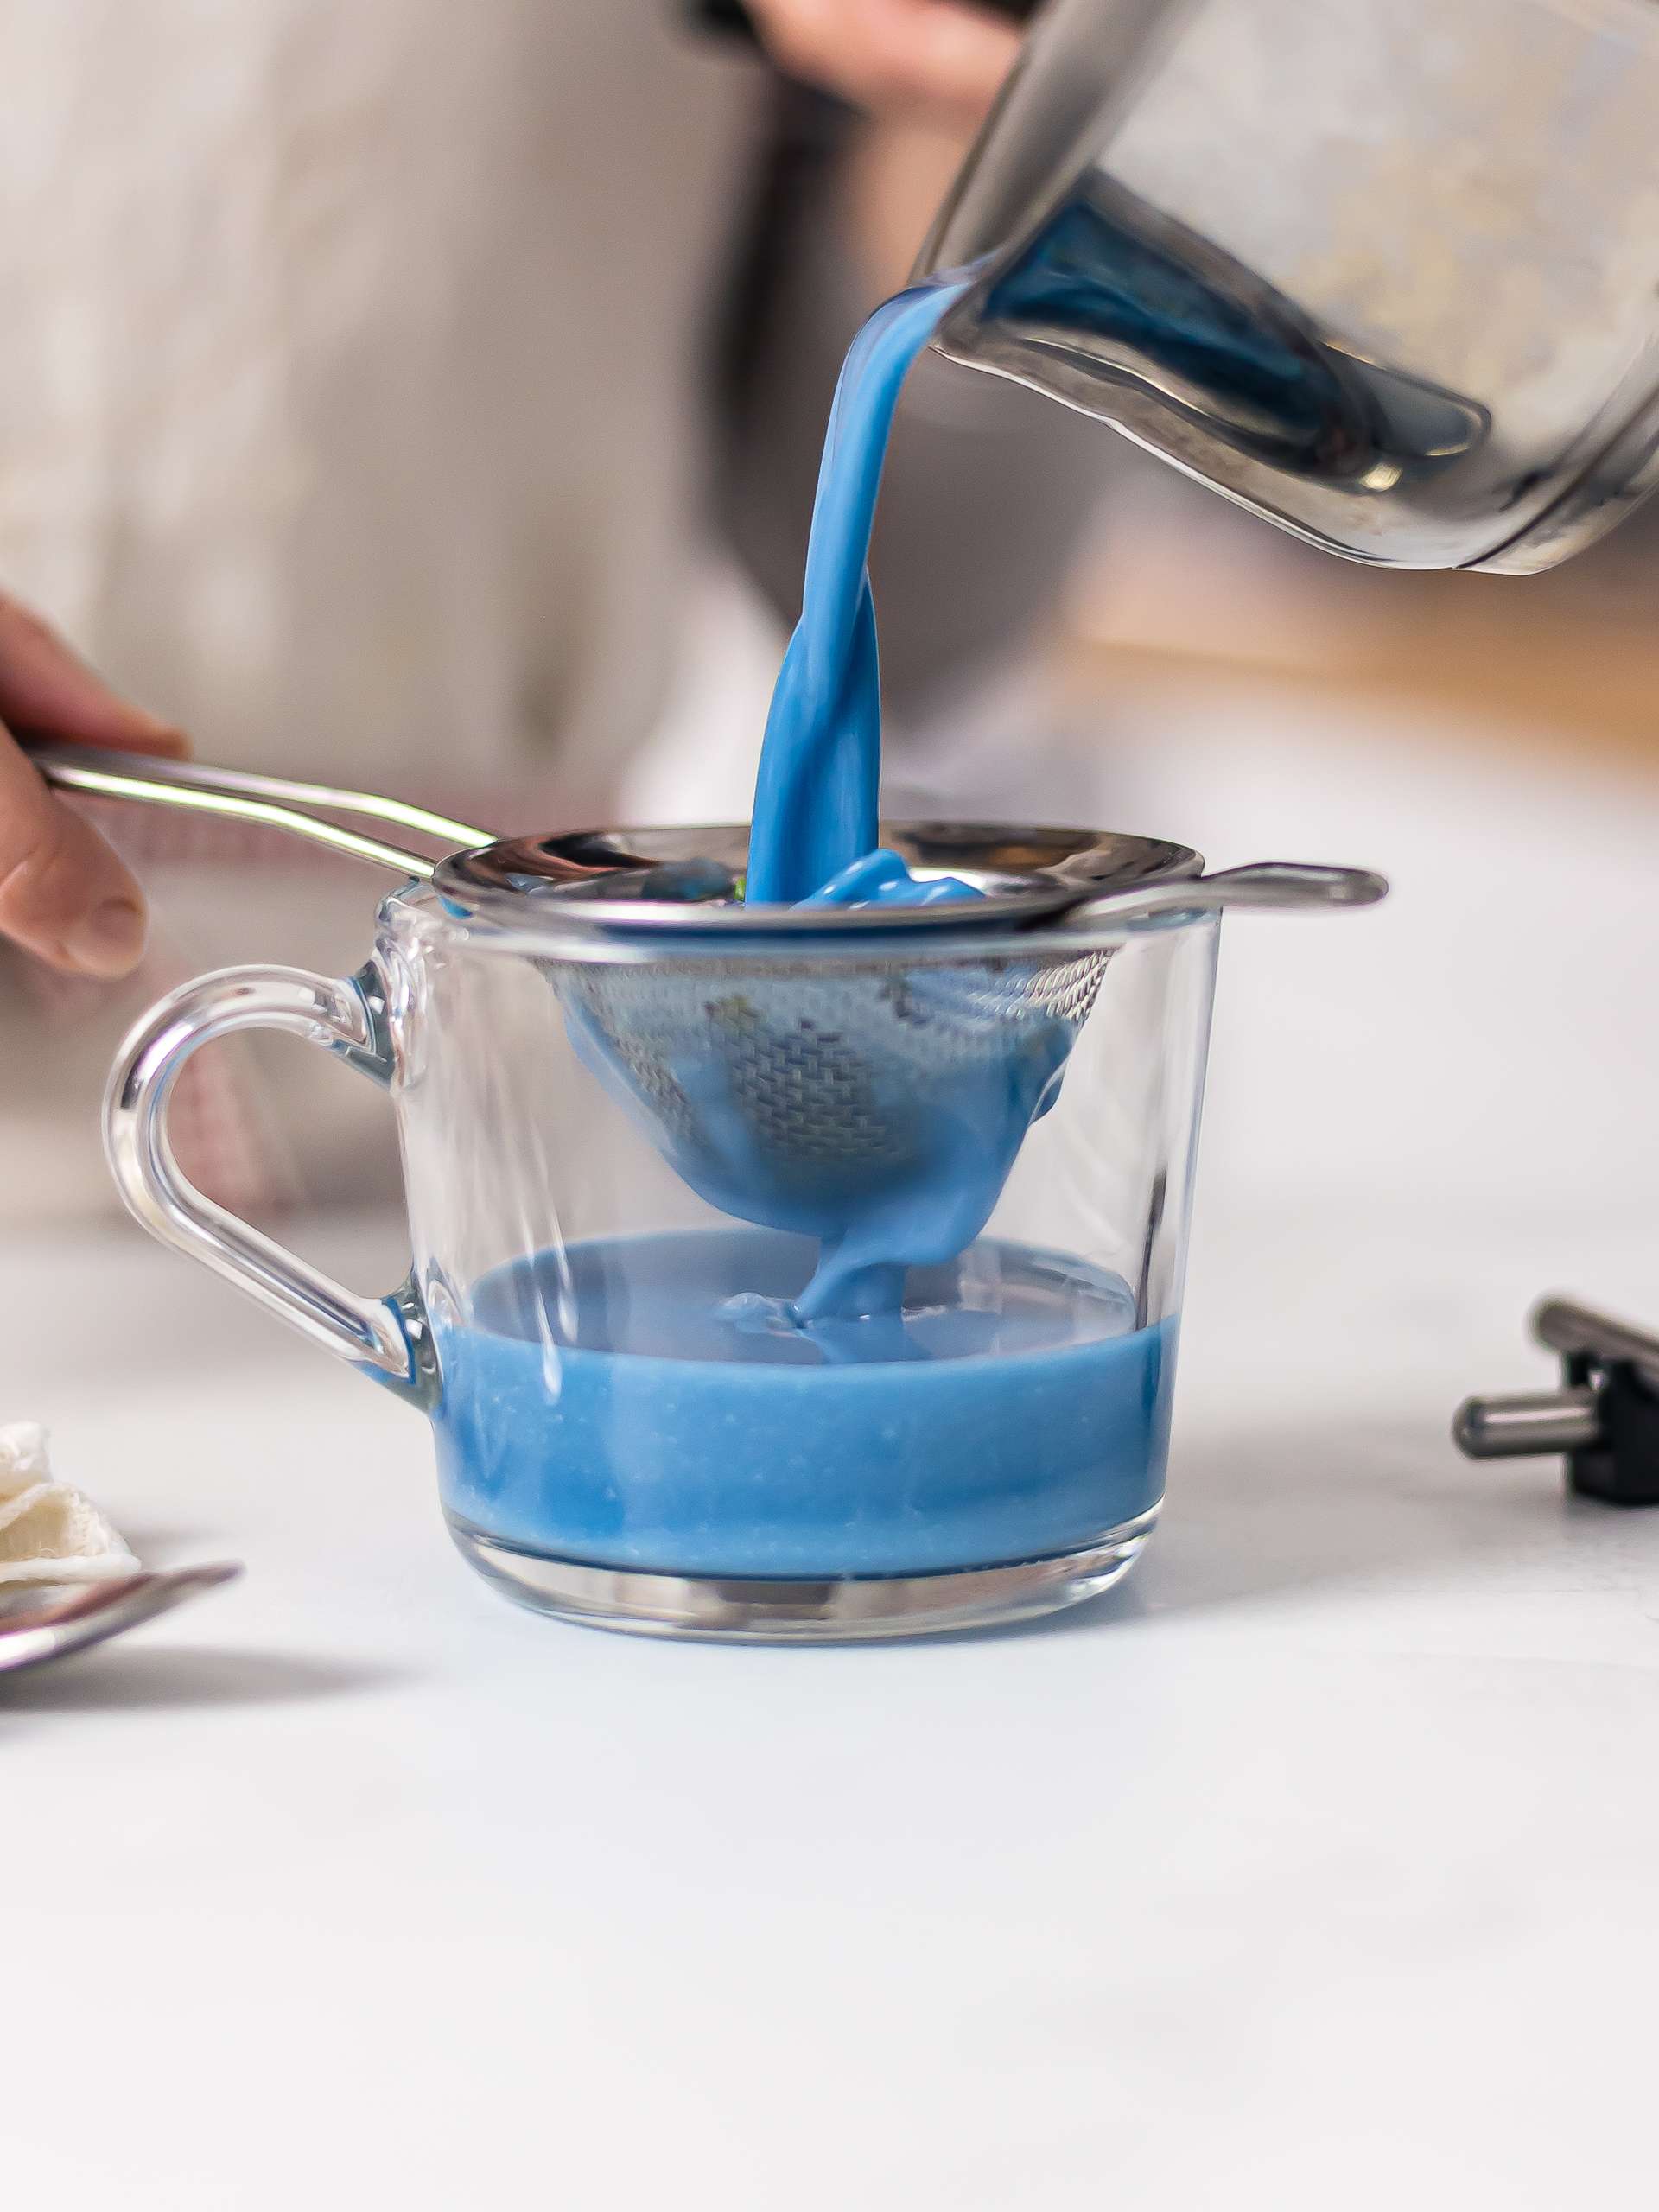 filtering butterfly pea flowers from blue latte